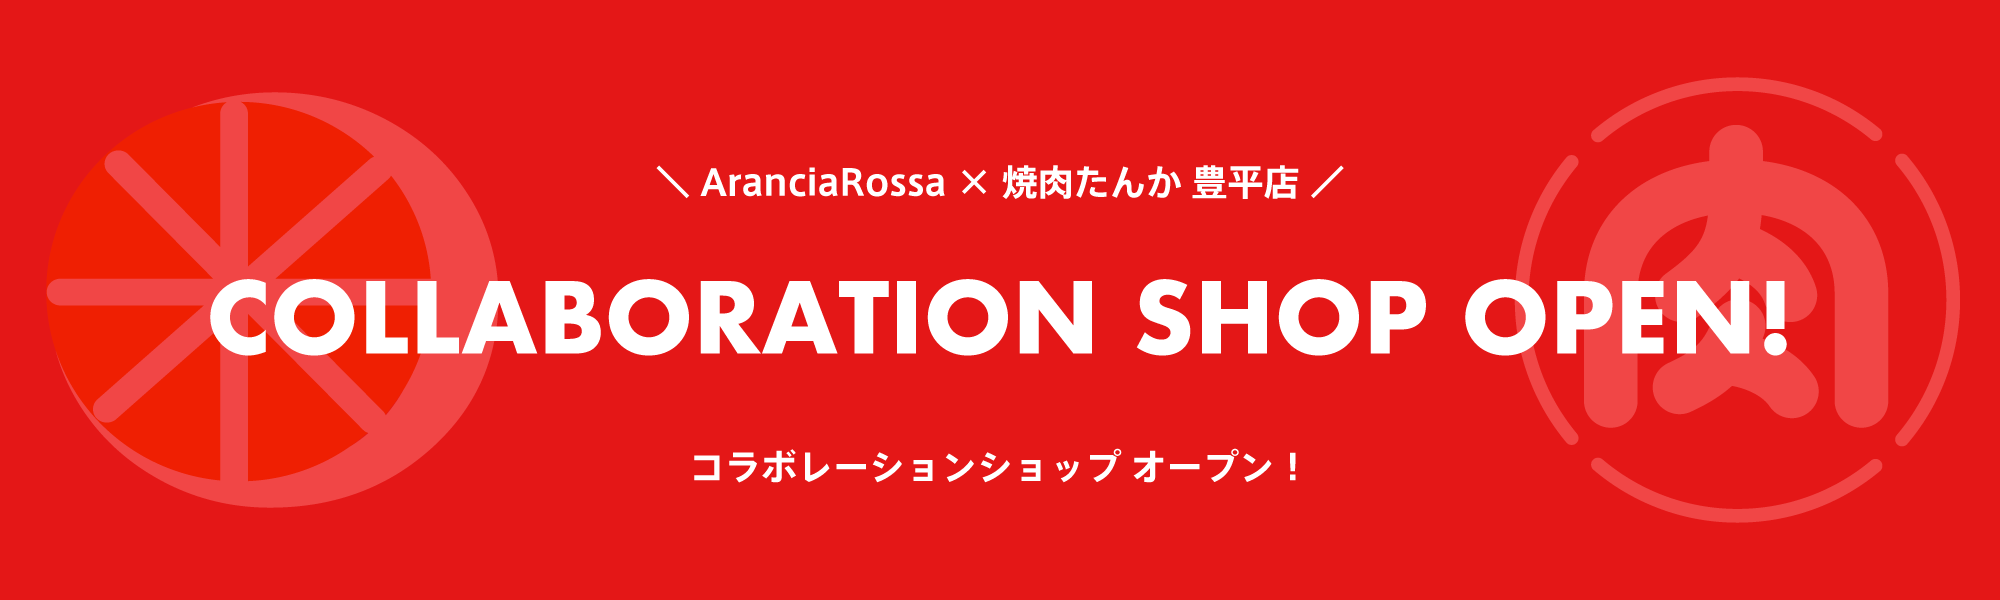 AranciaRossa × 焼肉たんか 豊平店
COLLABORATION SHOP OPEN!